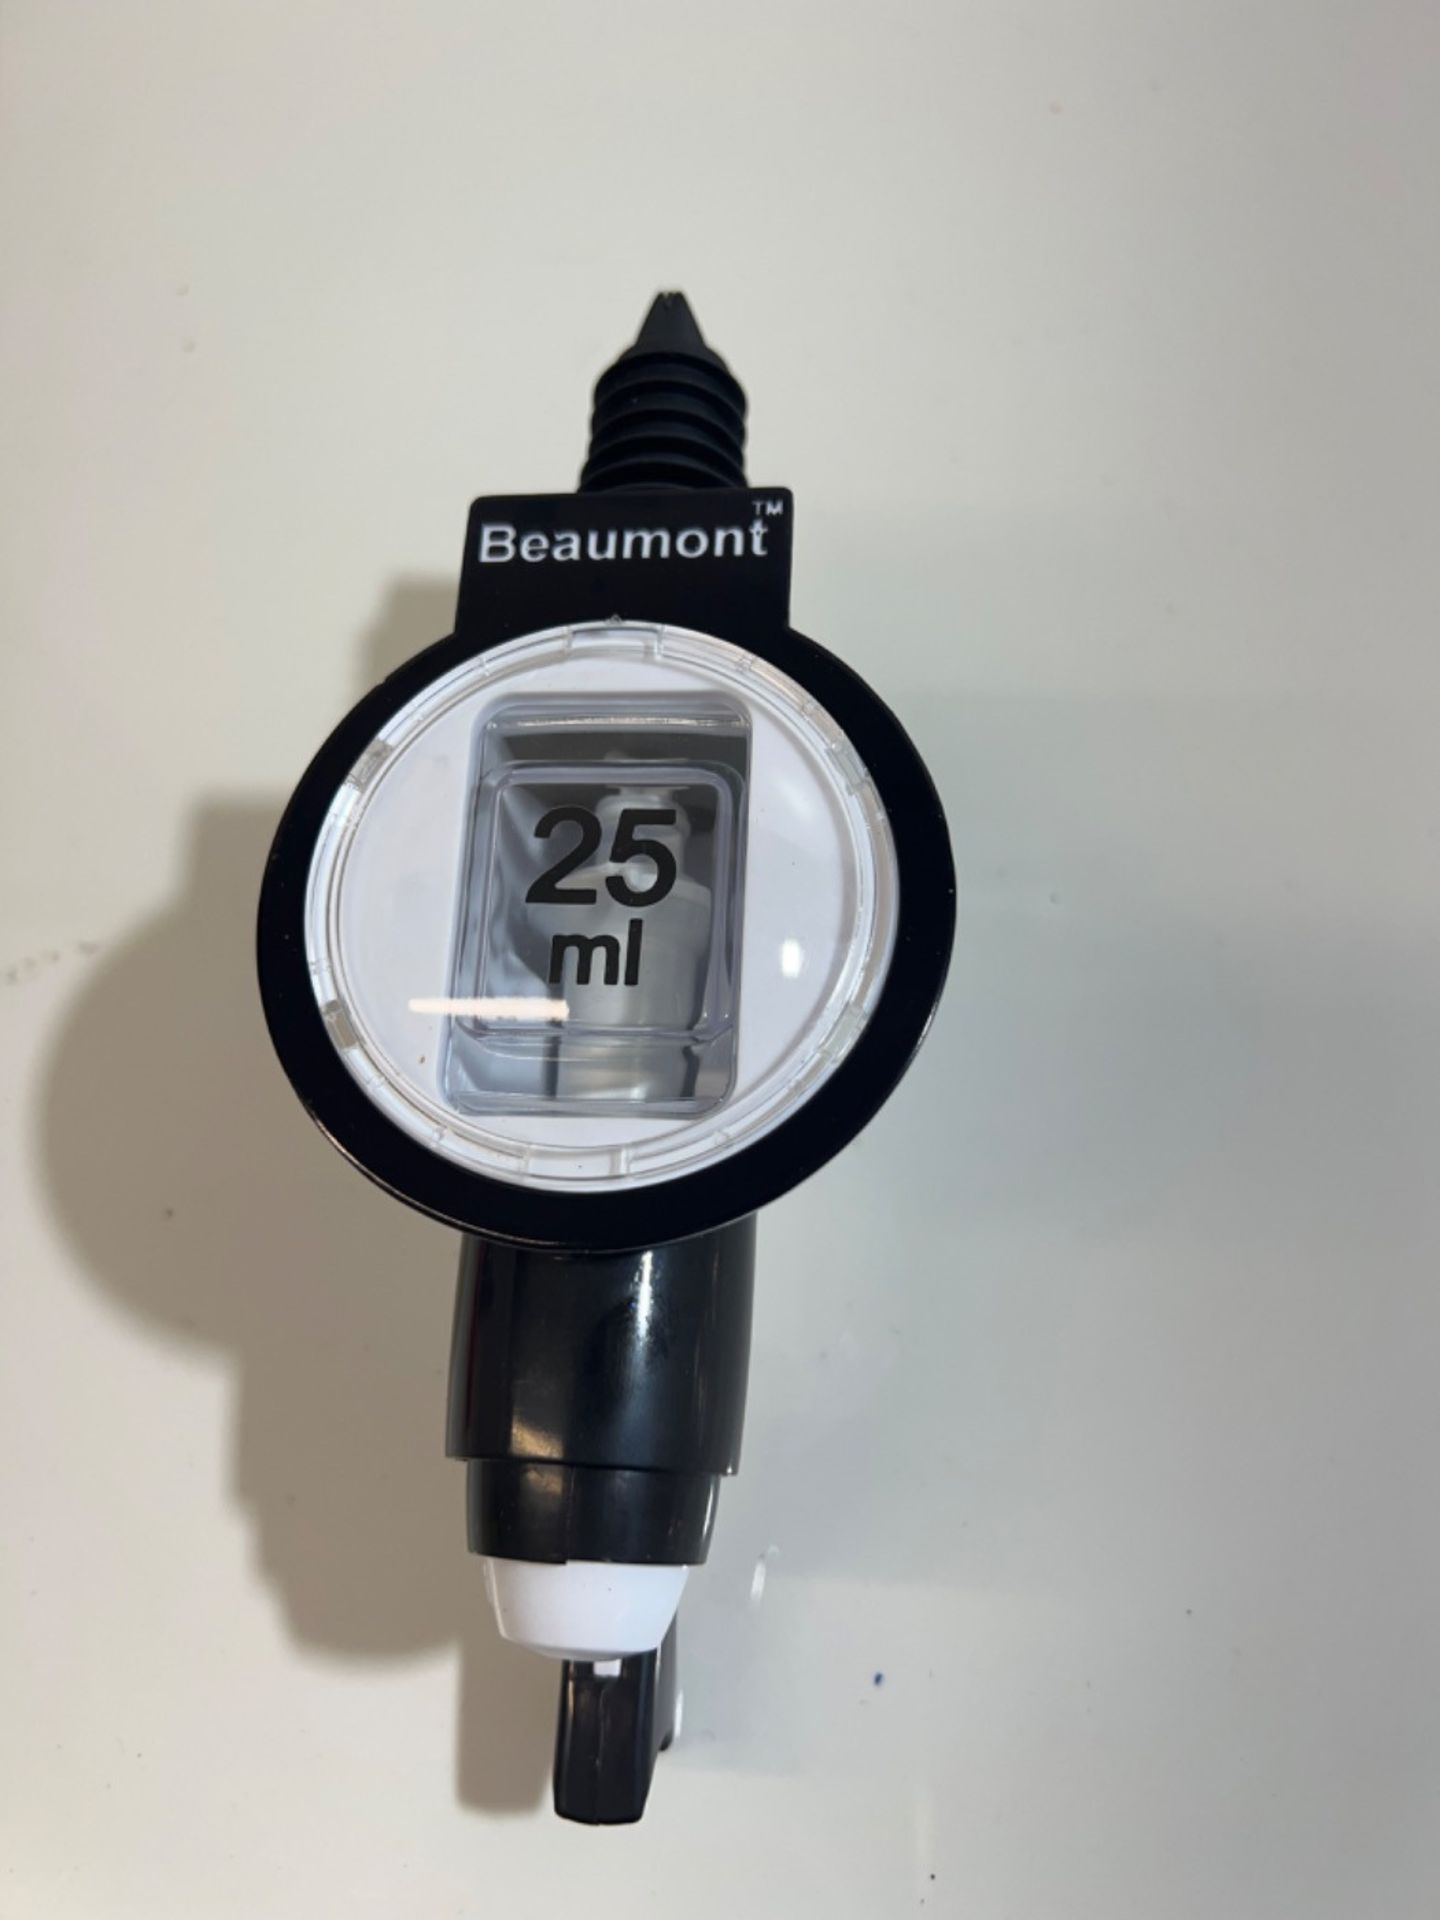 Beaumont 3134 25ml Metrix SL Spirit Measure Optic, Black - Image 3 of 3